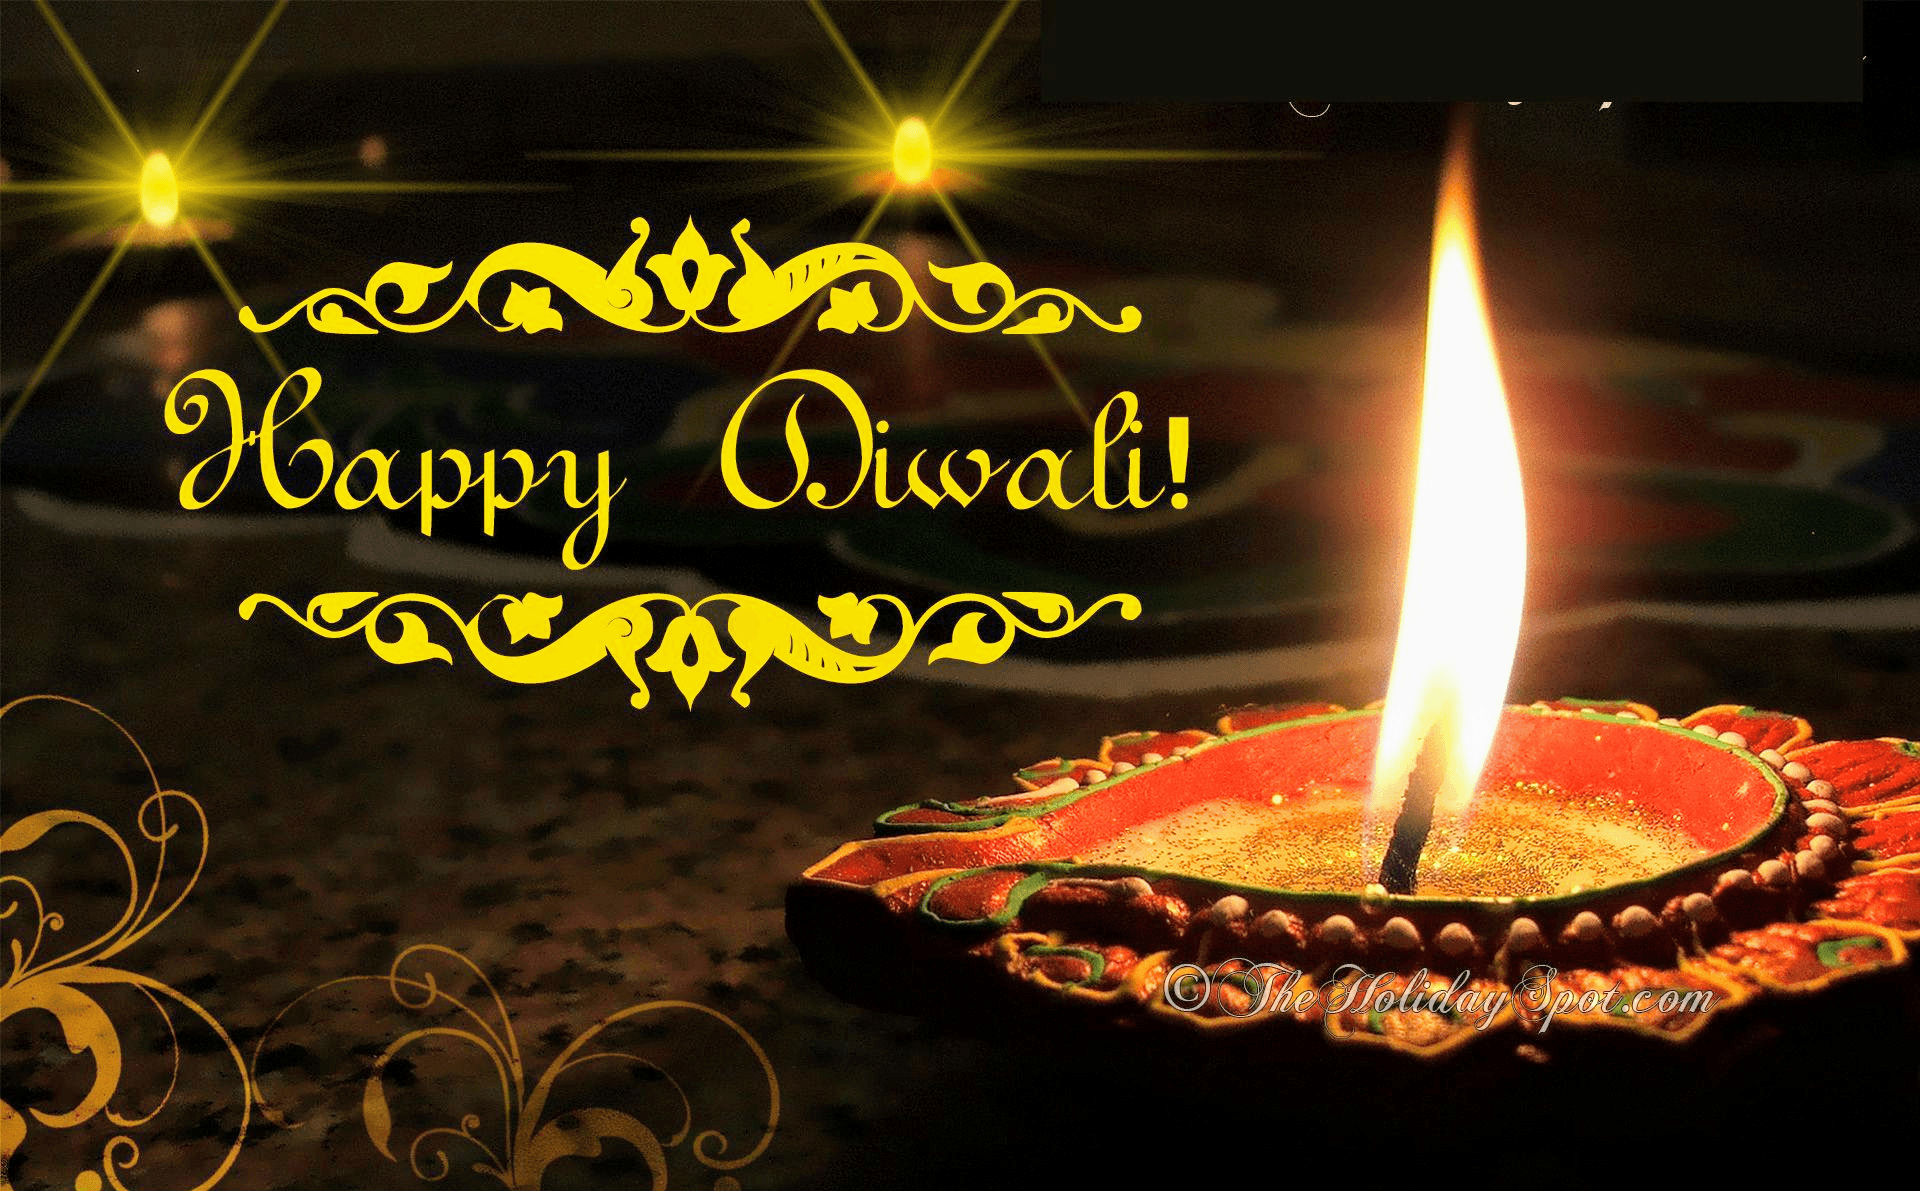 2019) Happy Diwali Image Wallpaper, Download Happy Diwali